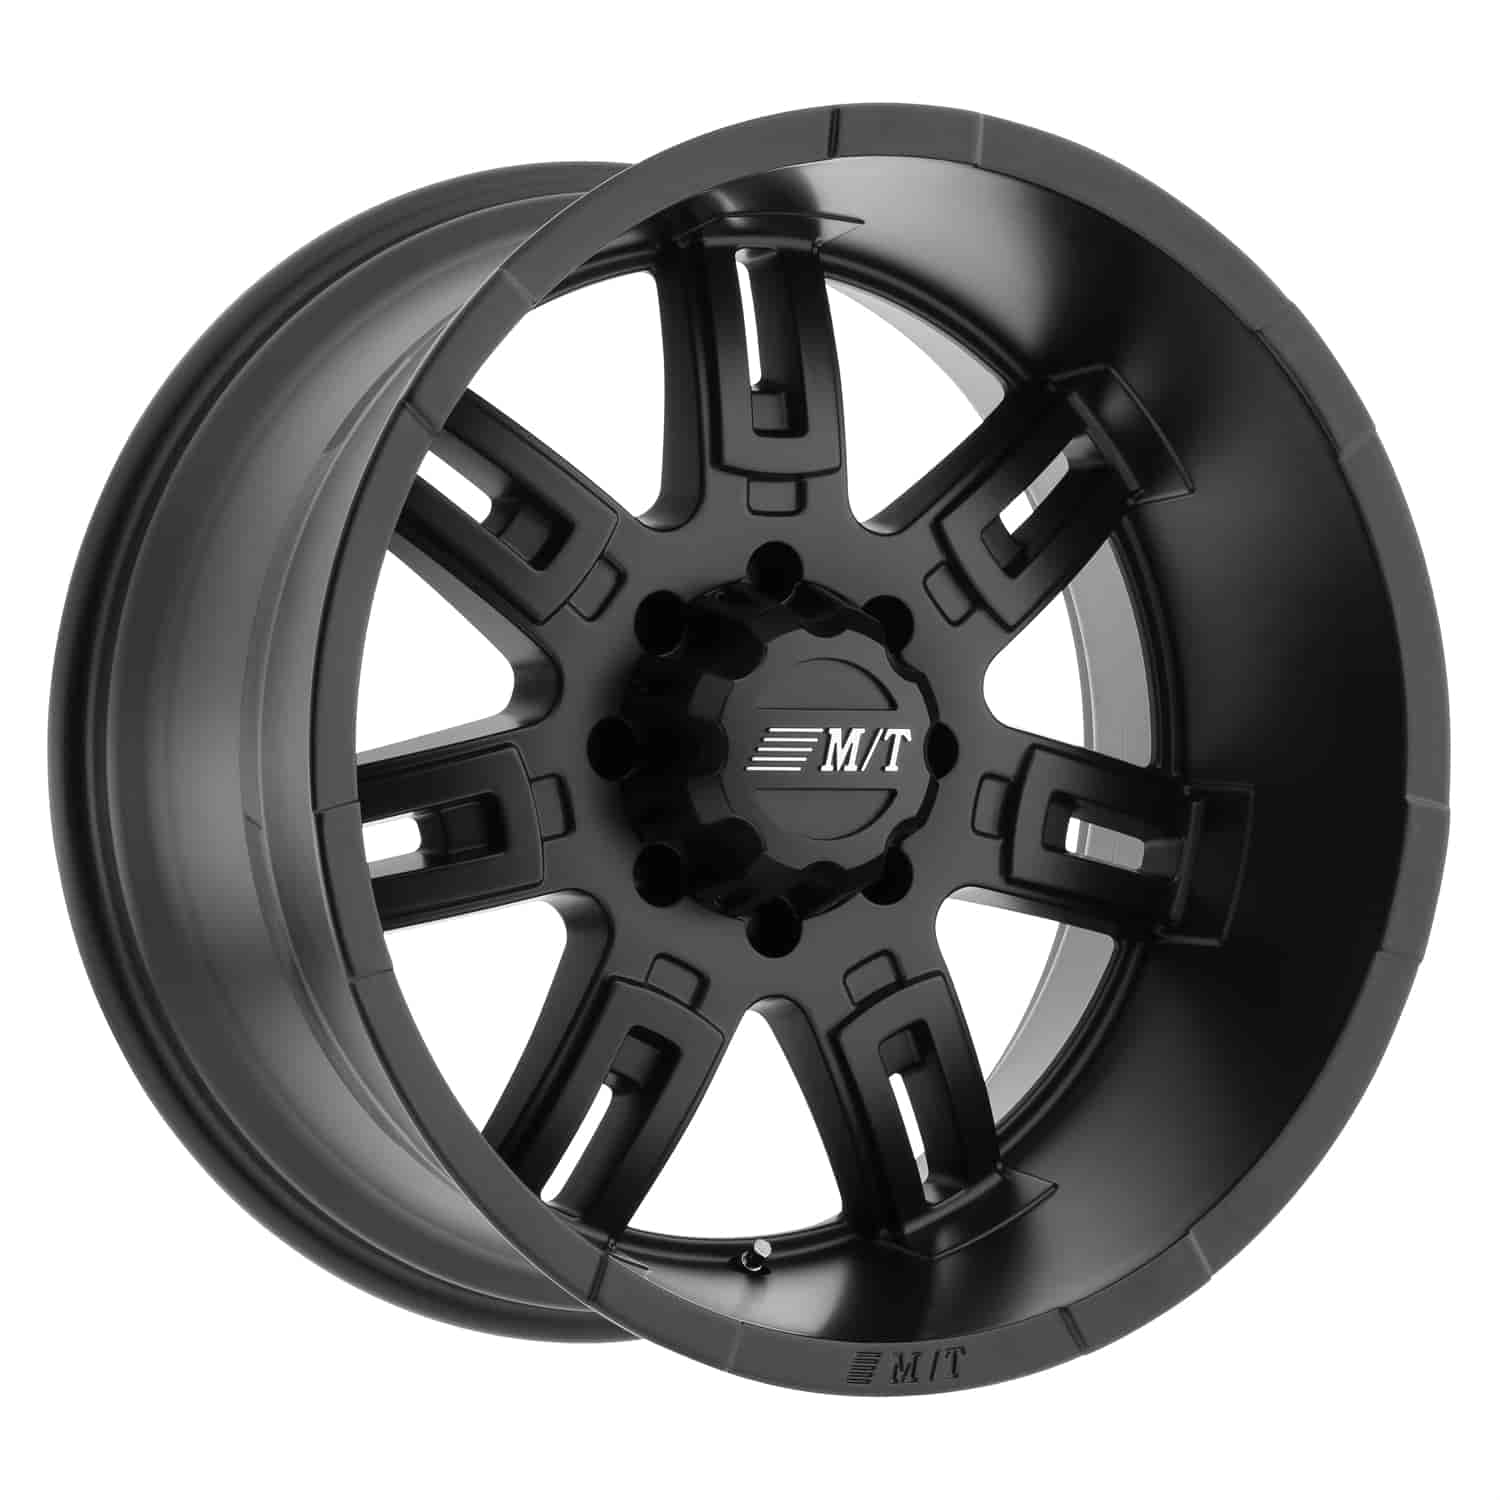 SideBiter II Wheel Size: 22" x 12" Bolt Pattern: 8 x 170mm Rear Spacing: 4-3/4" Offset: -44mm Max. Load: 3640 lbs